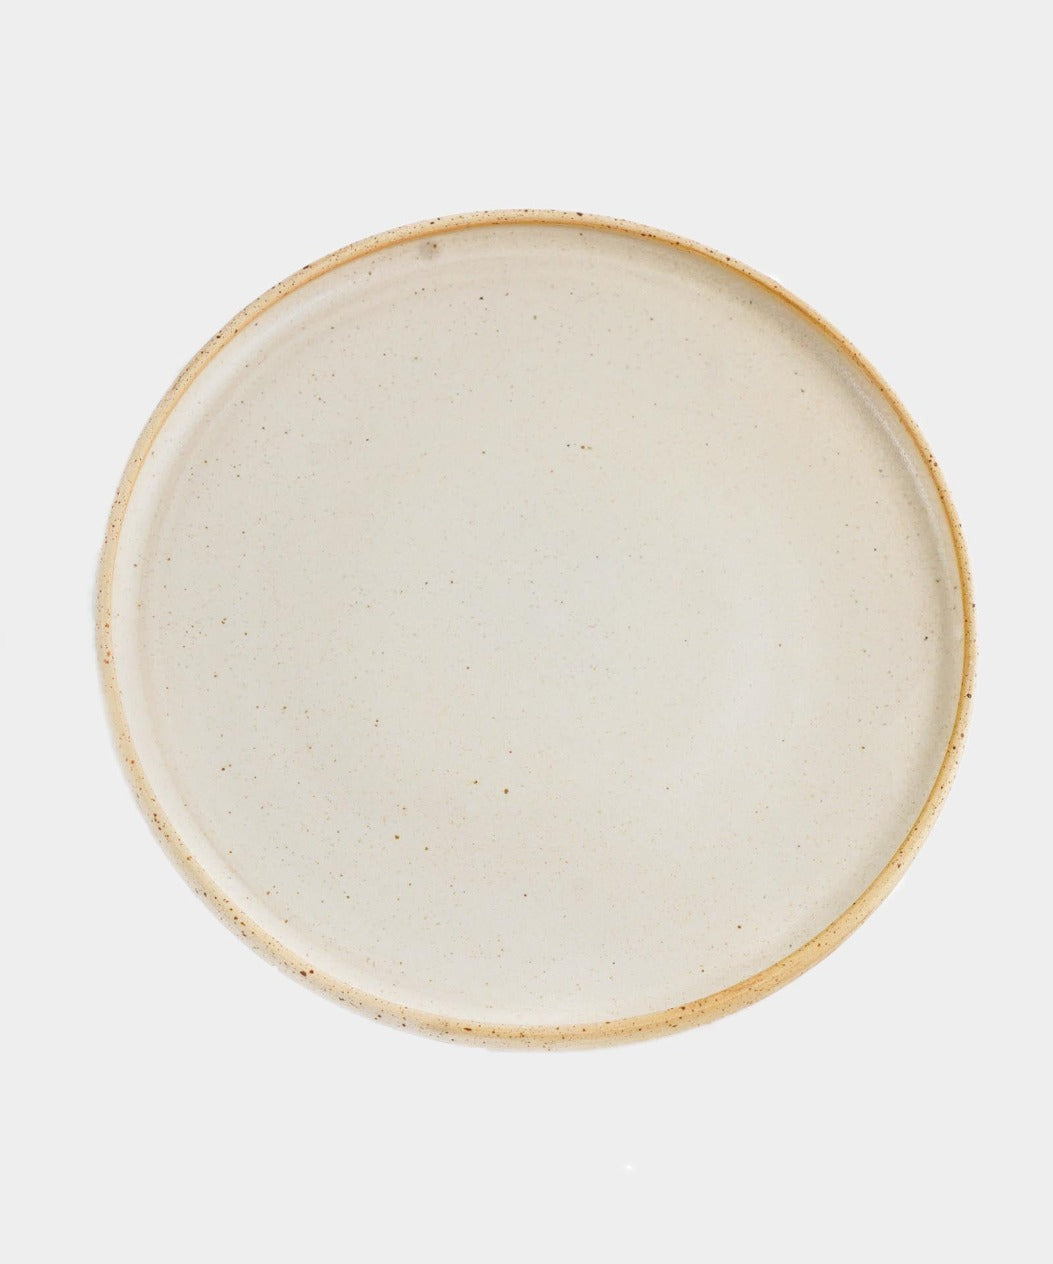 Håndlavet Keramik middagstallerken | NATURAL by Vang | Kerama